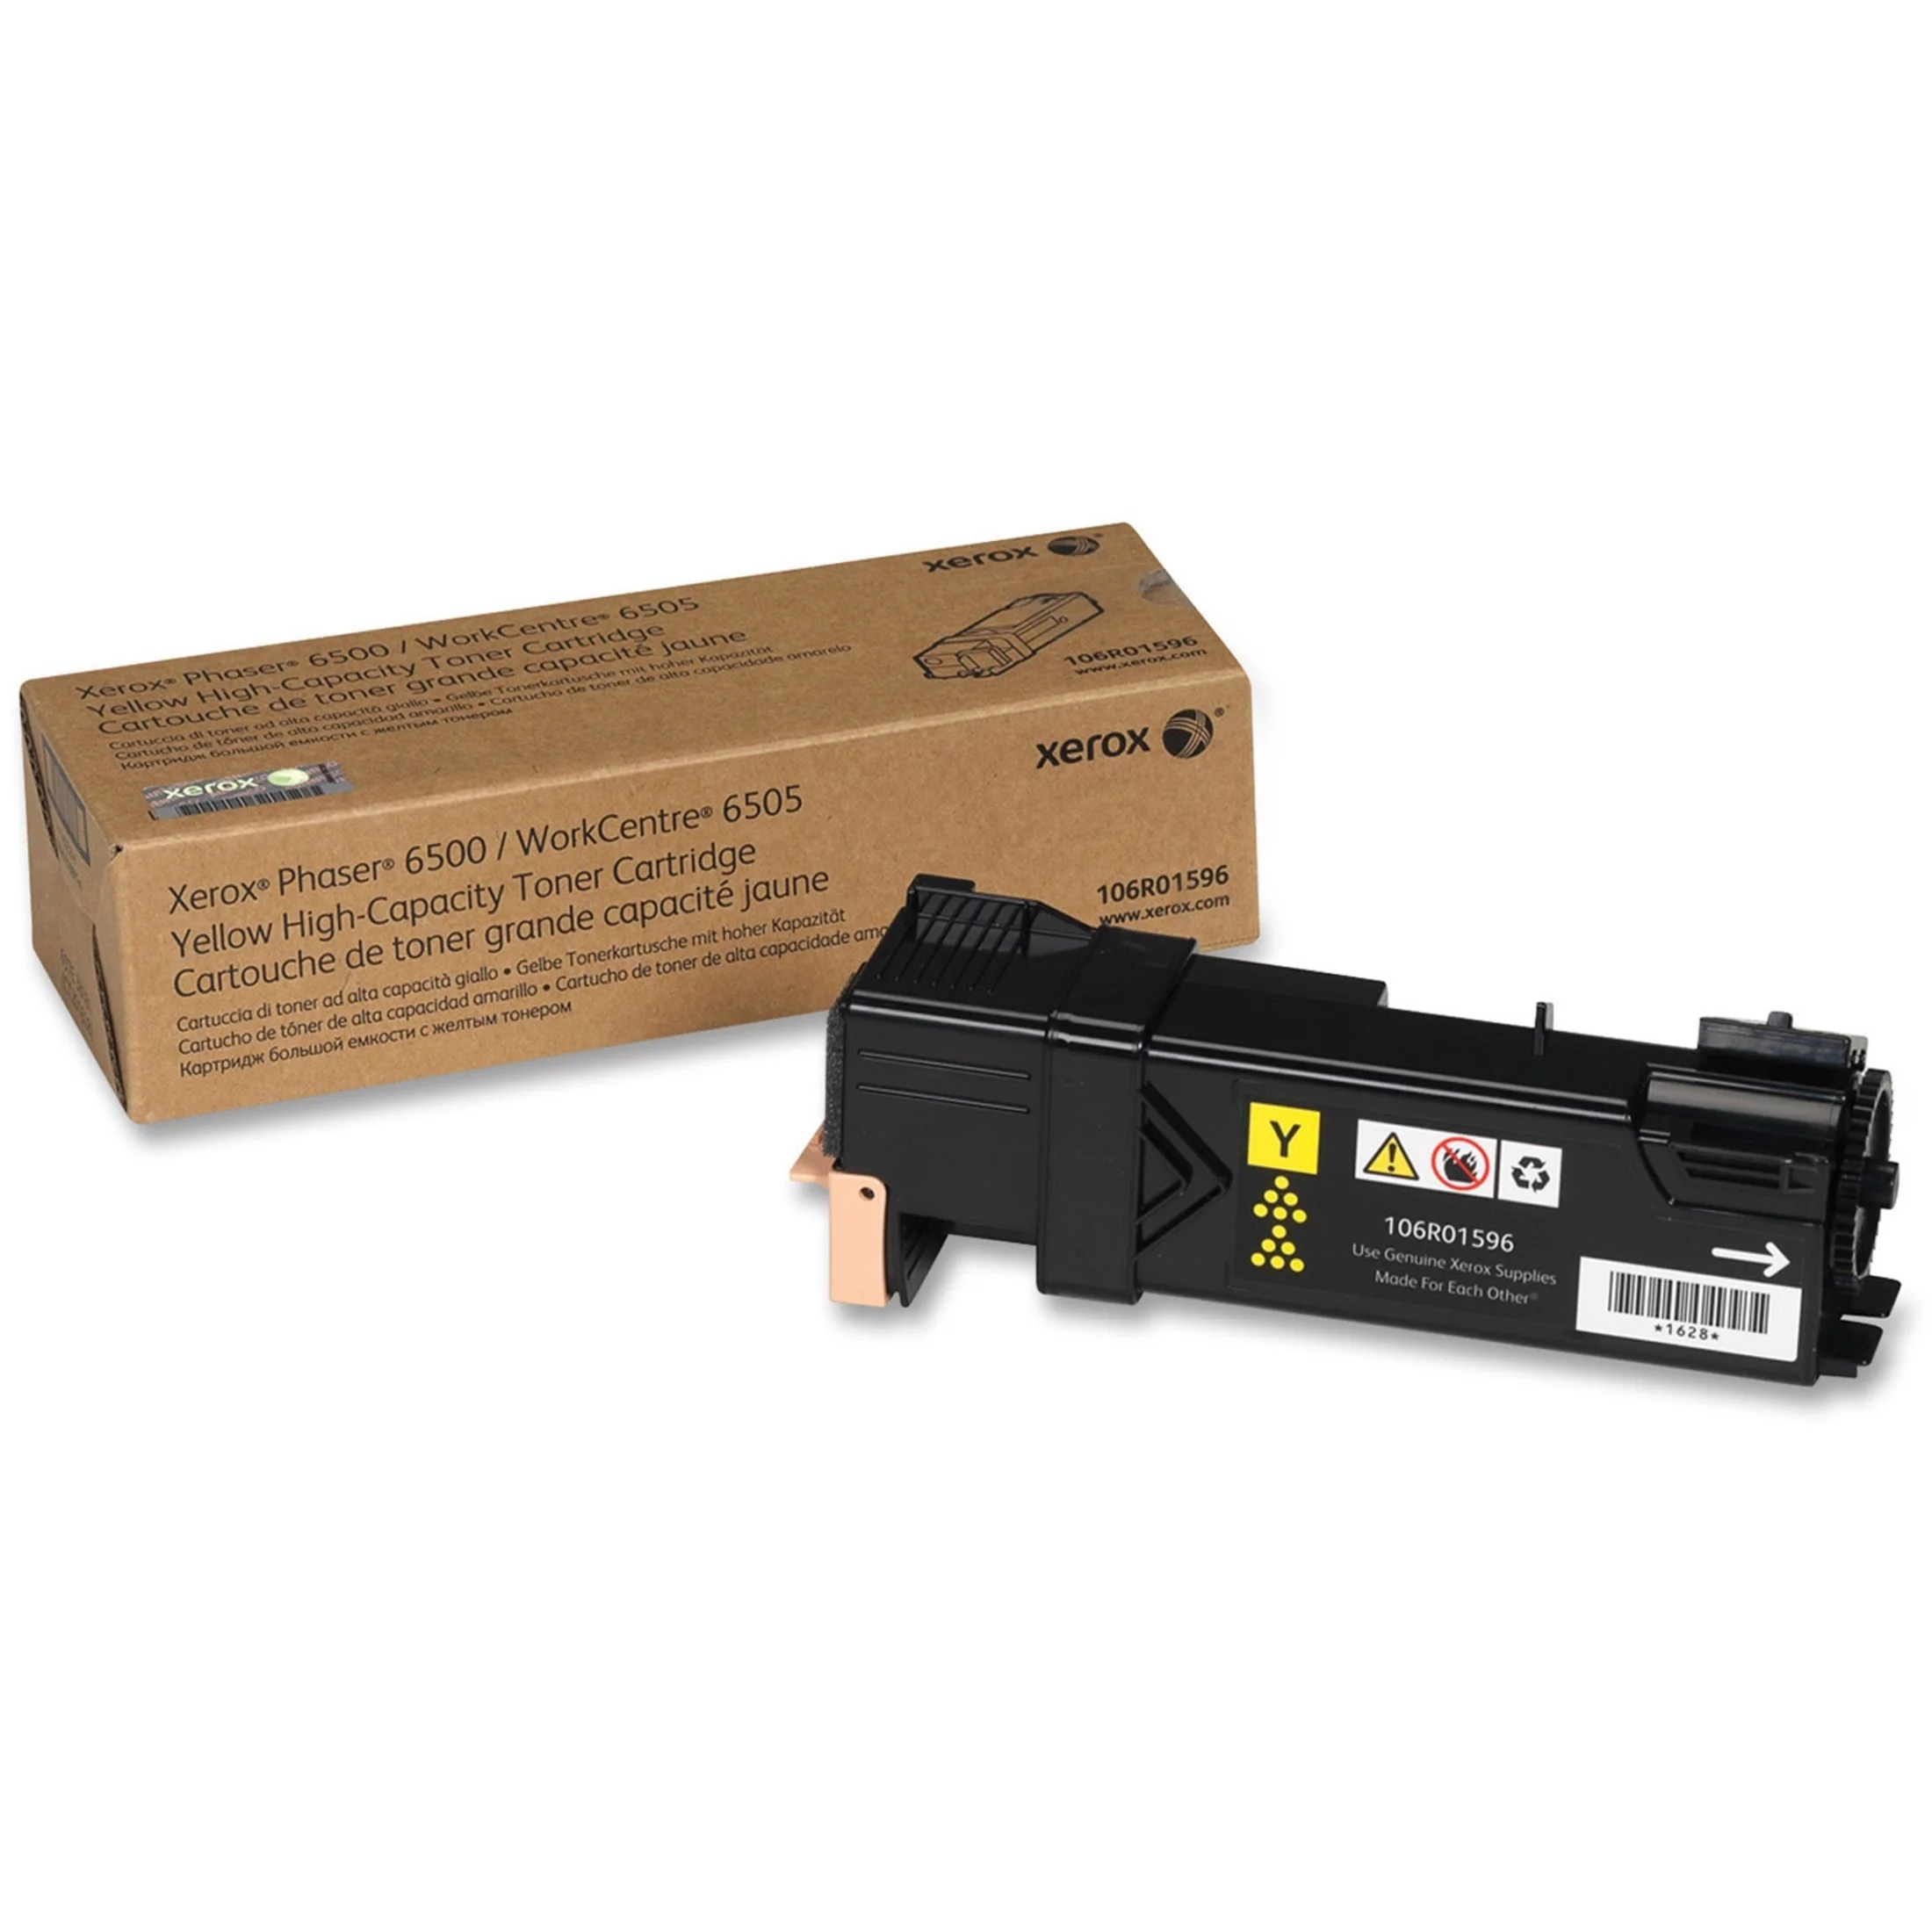 4890 Highlight Color Laser Printing System